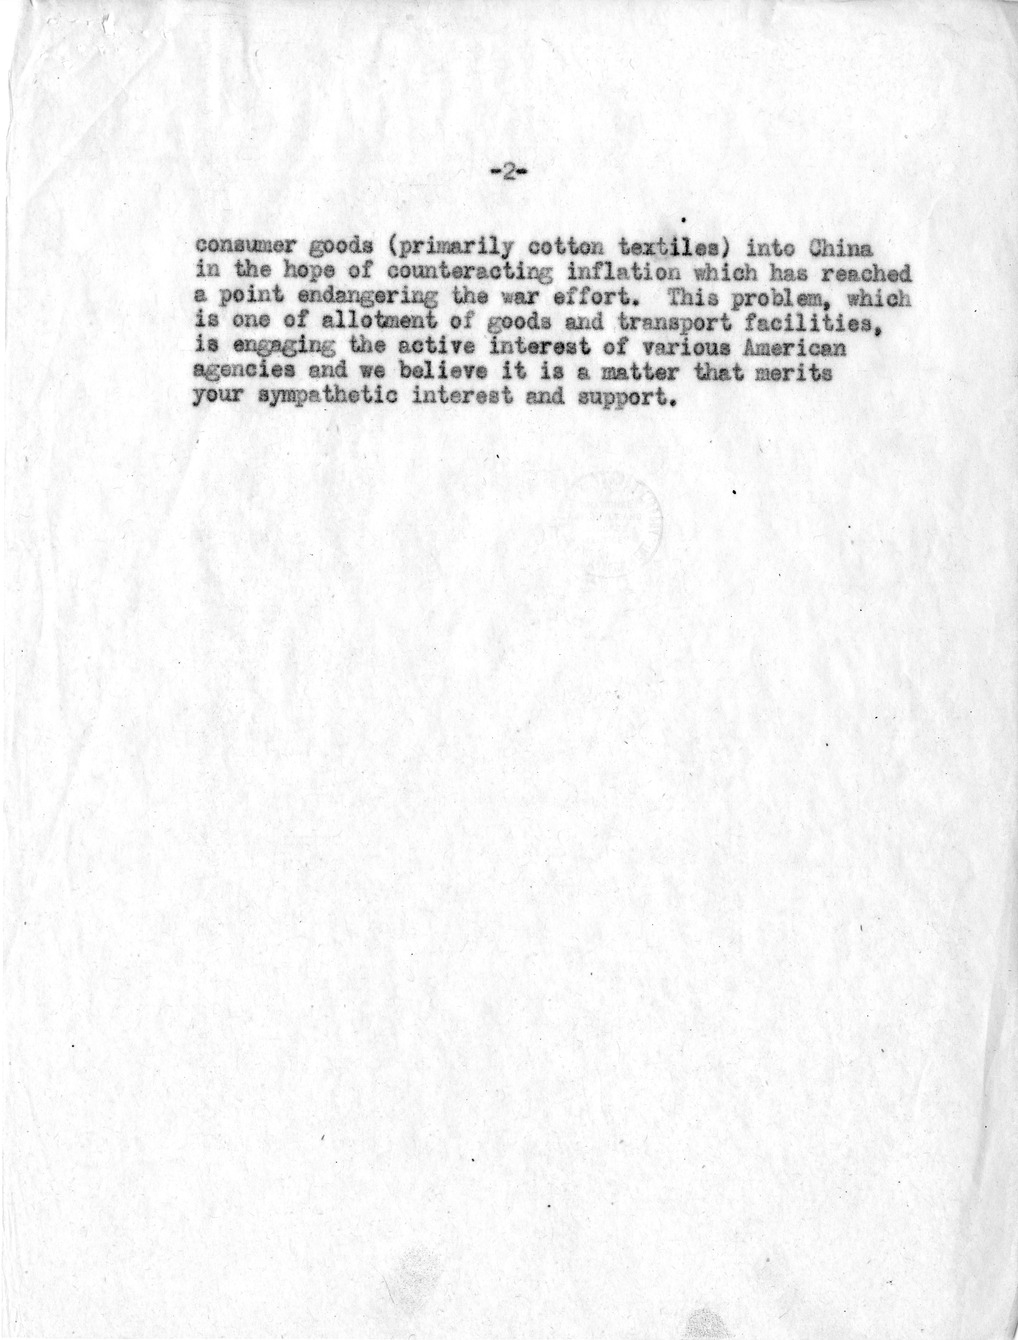 Memorandum from Secretary of State Edward Stettinius to President Harry S. Truman